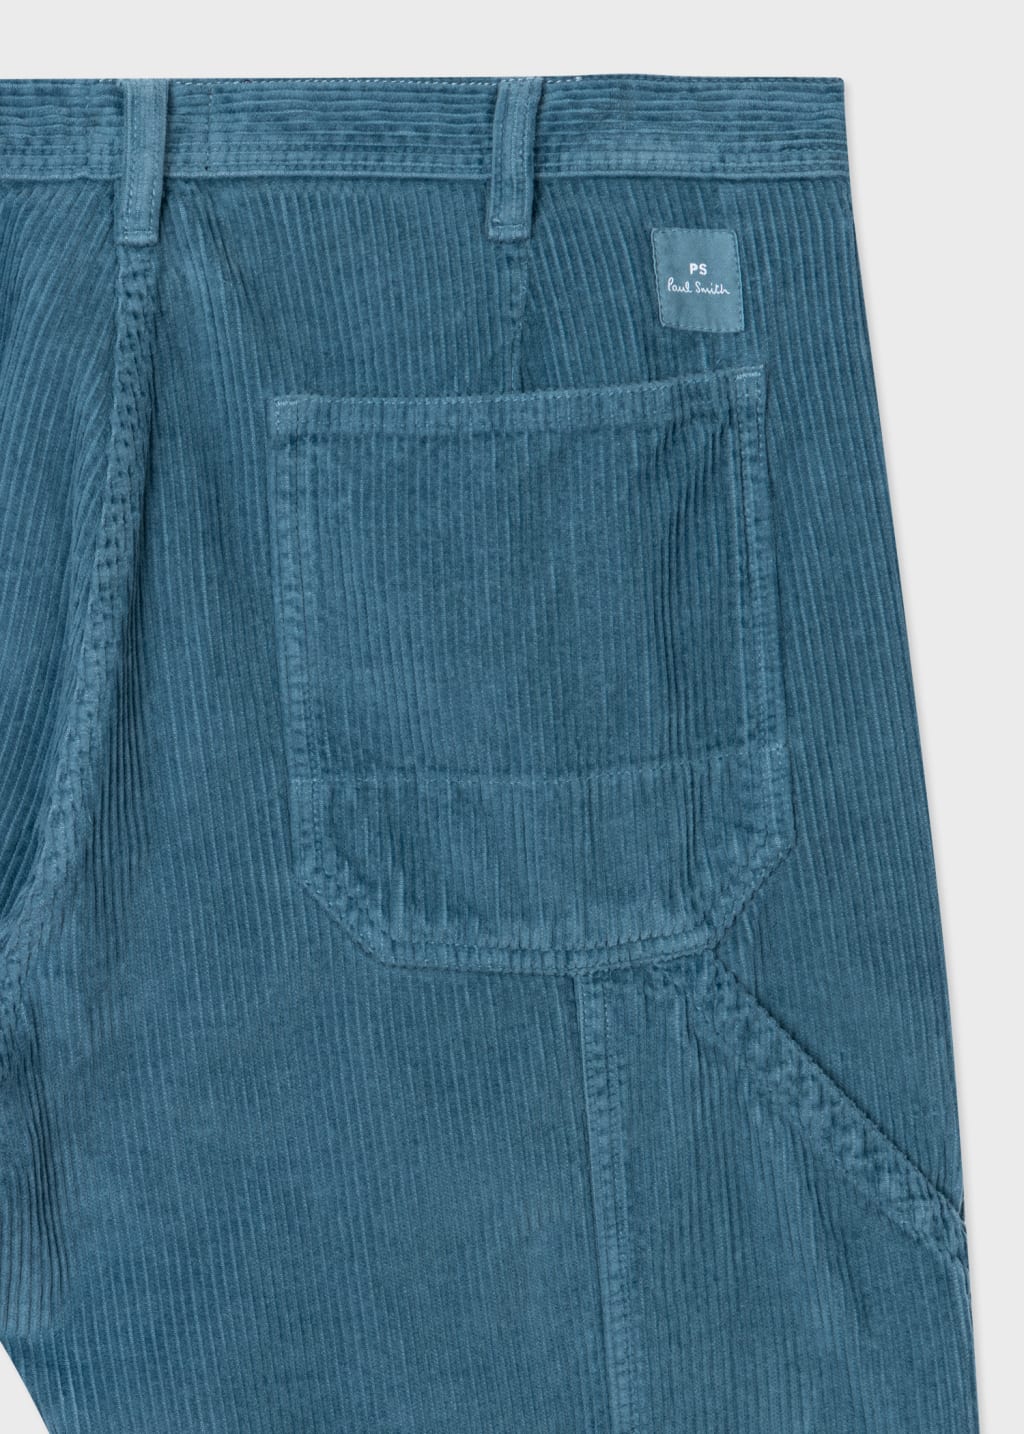 Detail View - Blue Corduroy Carpenter Trousers Paul Smith